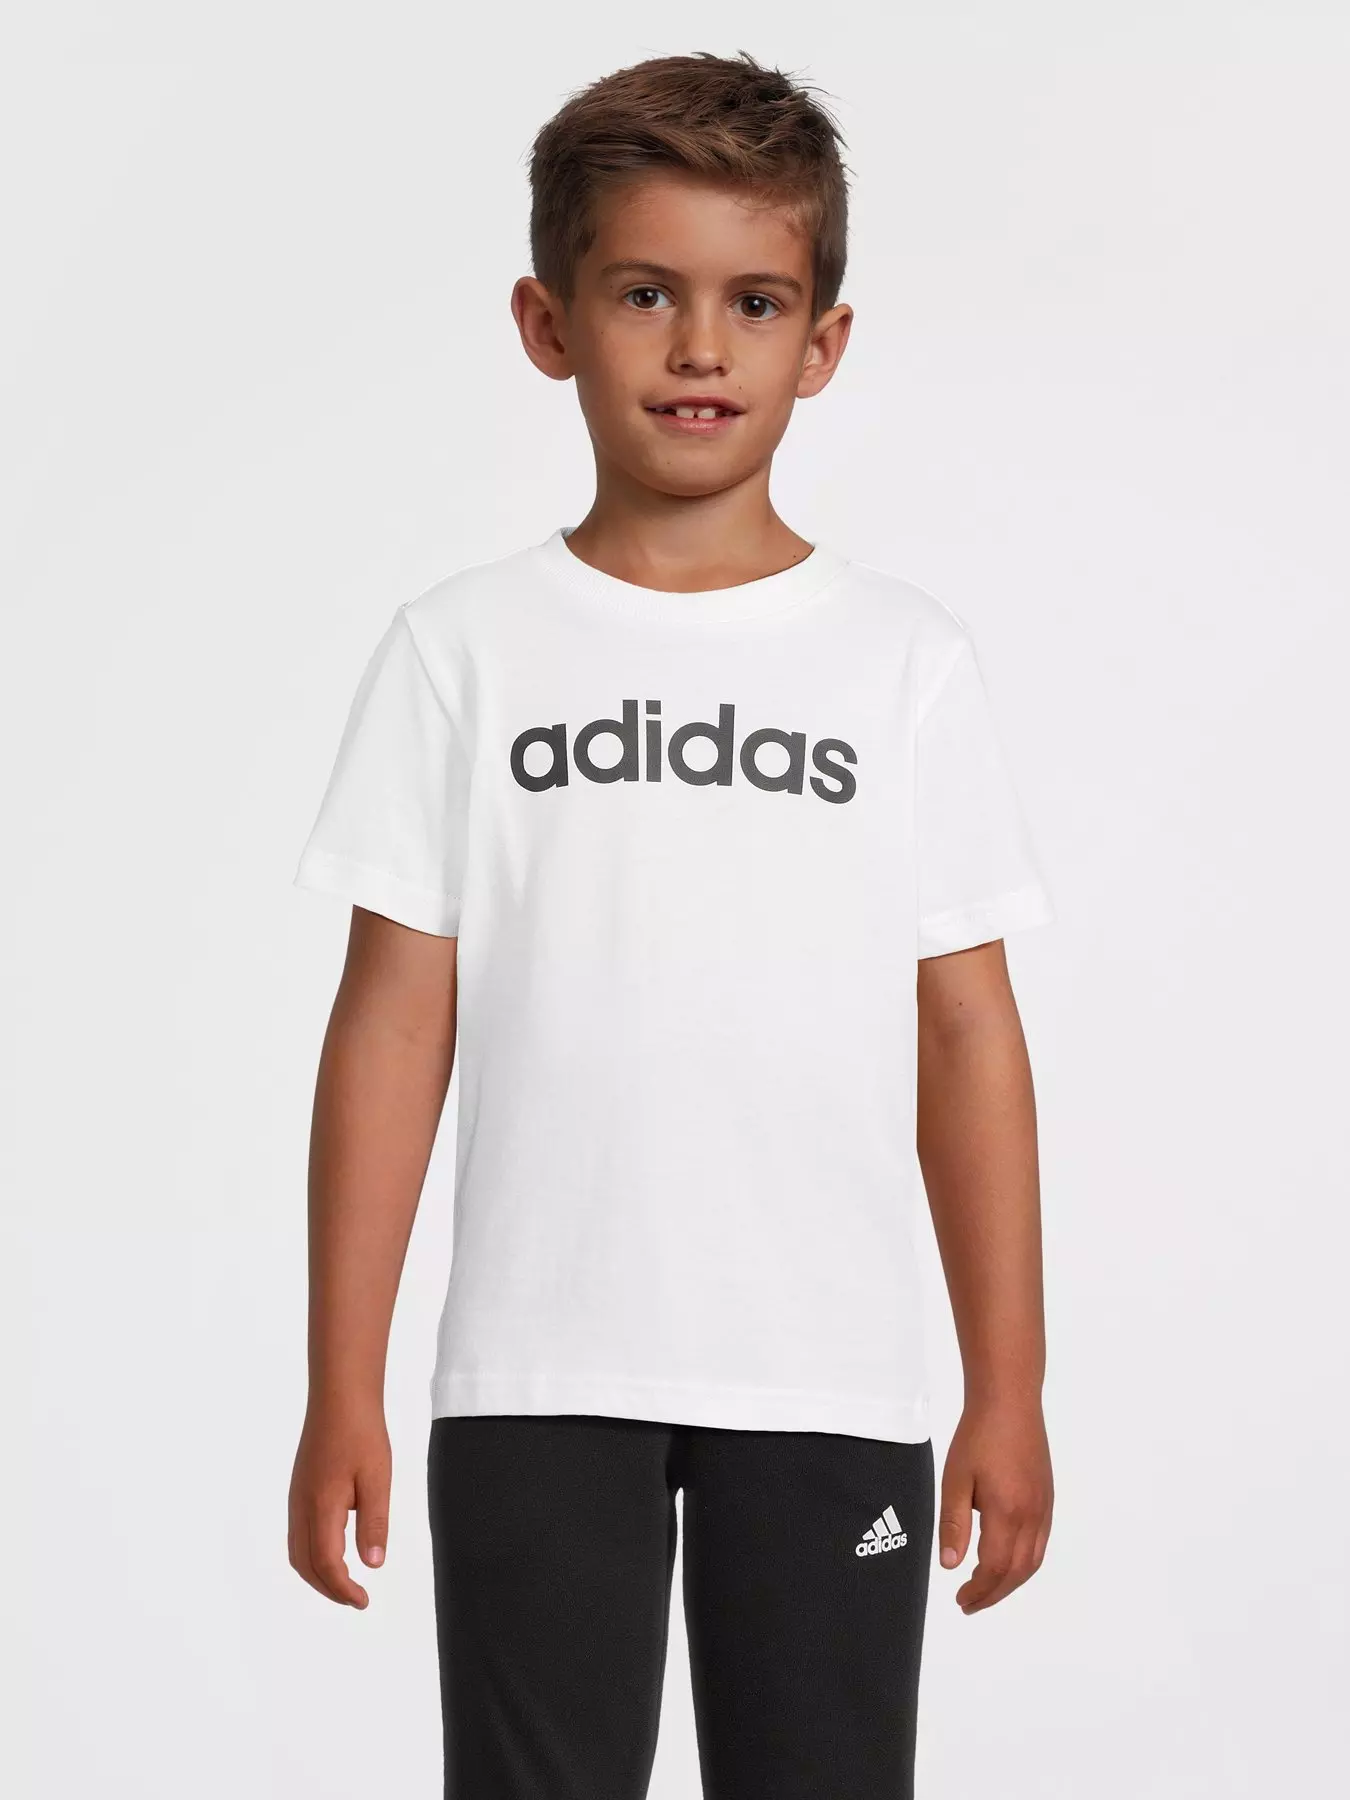 Adidas sportswear | Child & baby | Ireland Very